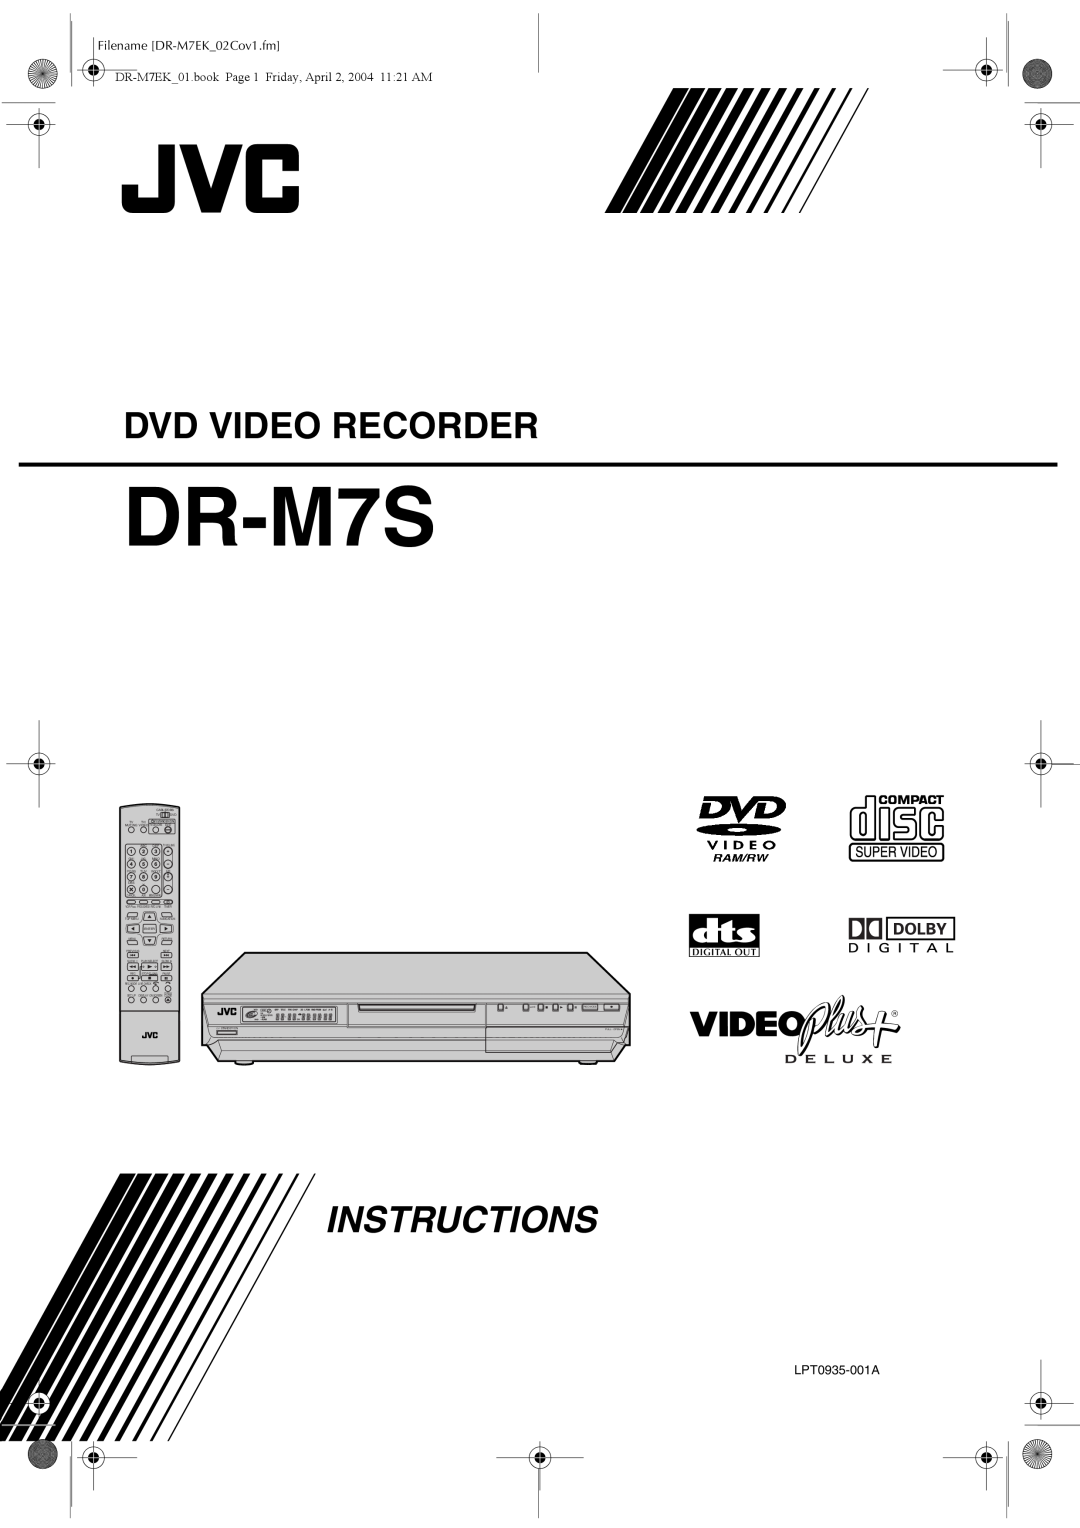 JVC DR-M7S manual Dvd Video Recorder, Instructions, Filename DR-M7EK02Cov1.fm, LPT0935-001A 